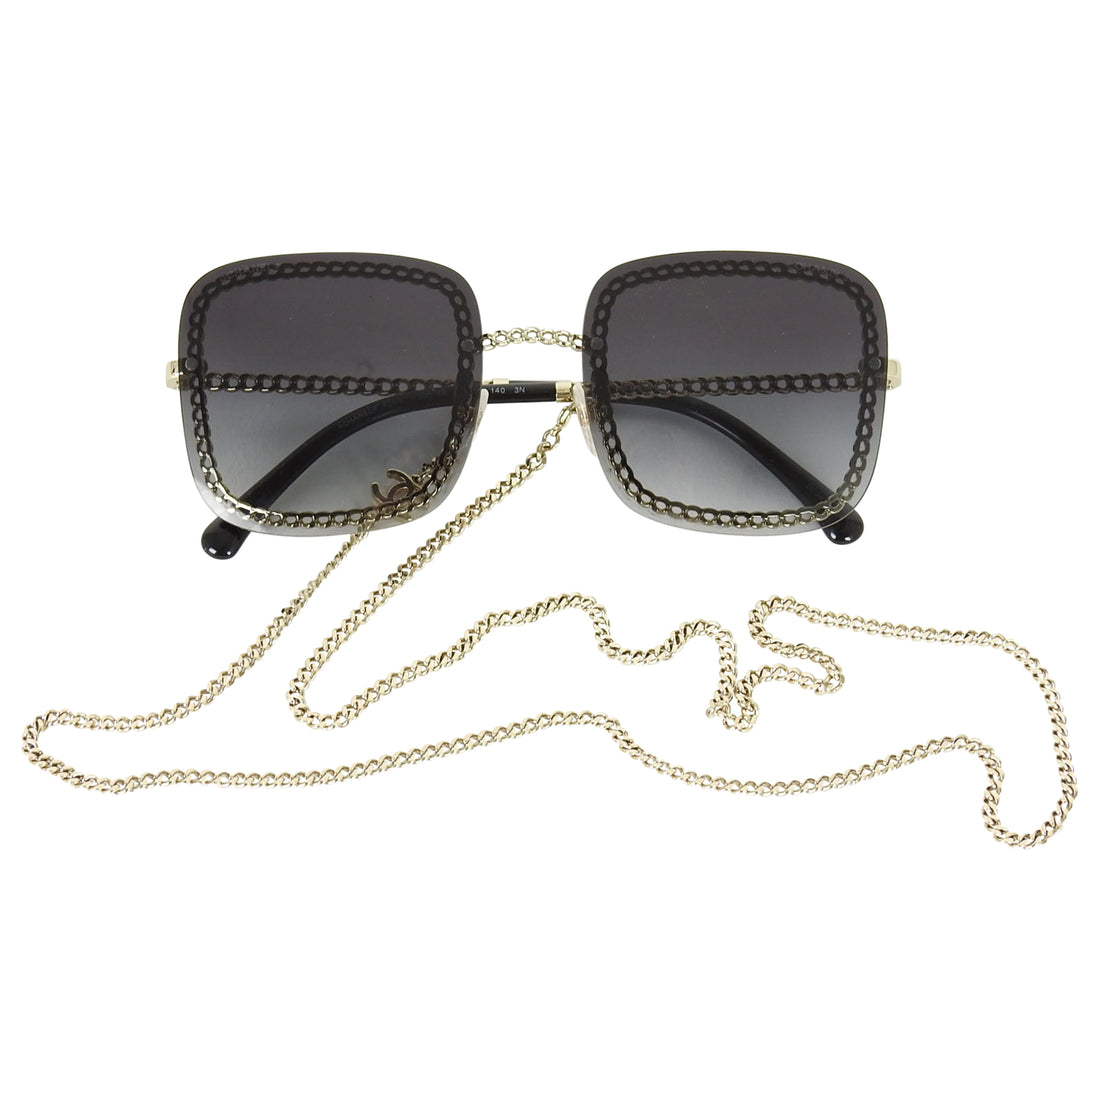 Chanel Square Chain Sunglasses Hotsell  xevietnamcom 1686247629